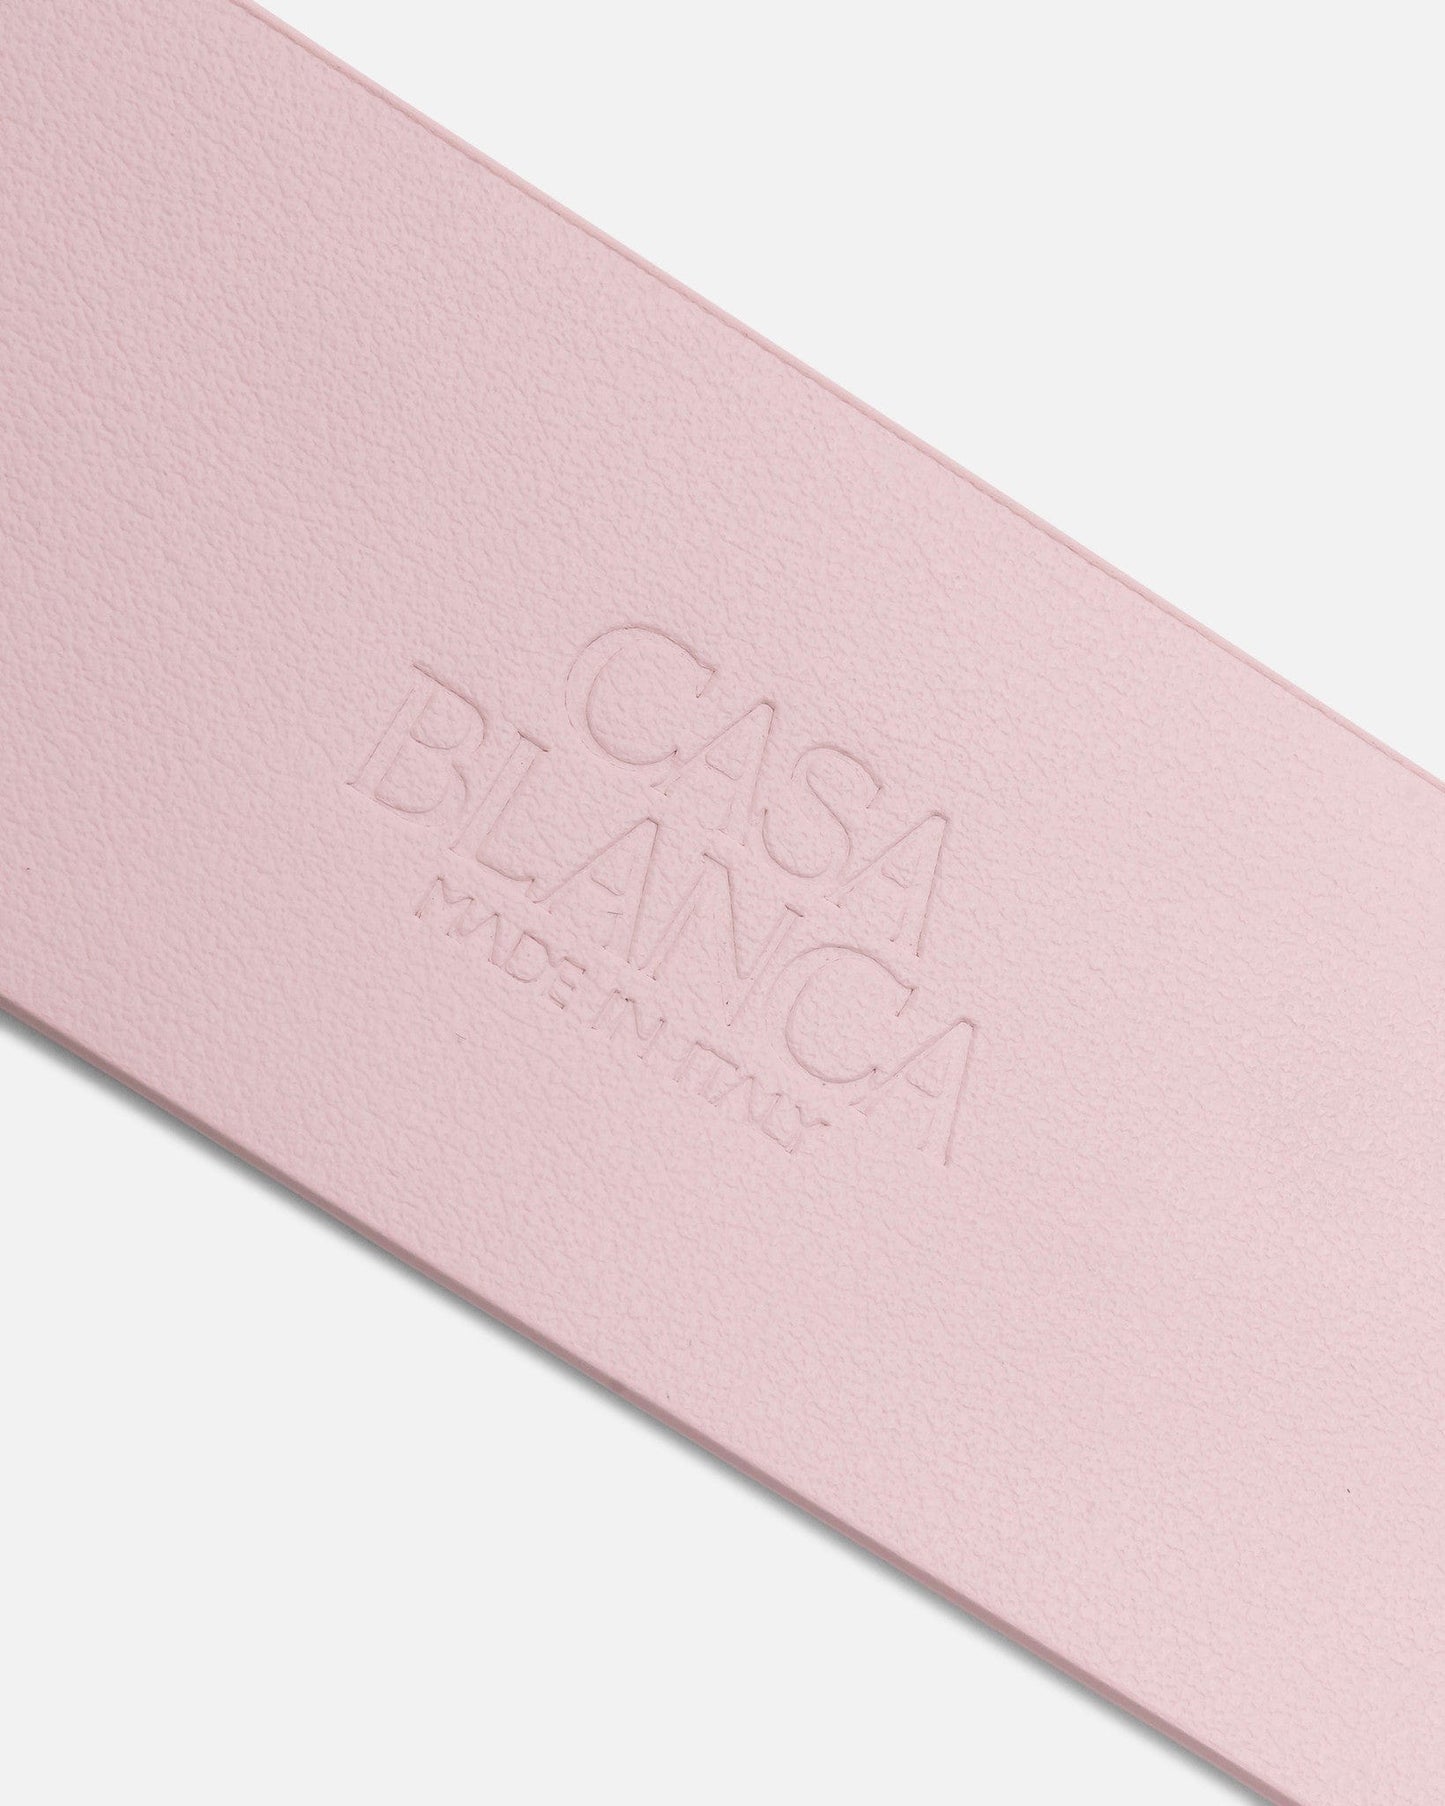 Casablanca Leather Goods Women's Cowboy Belt 35mm in Pink Multi